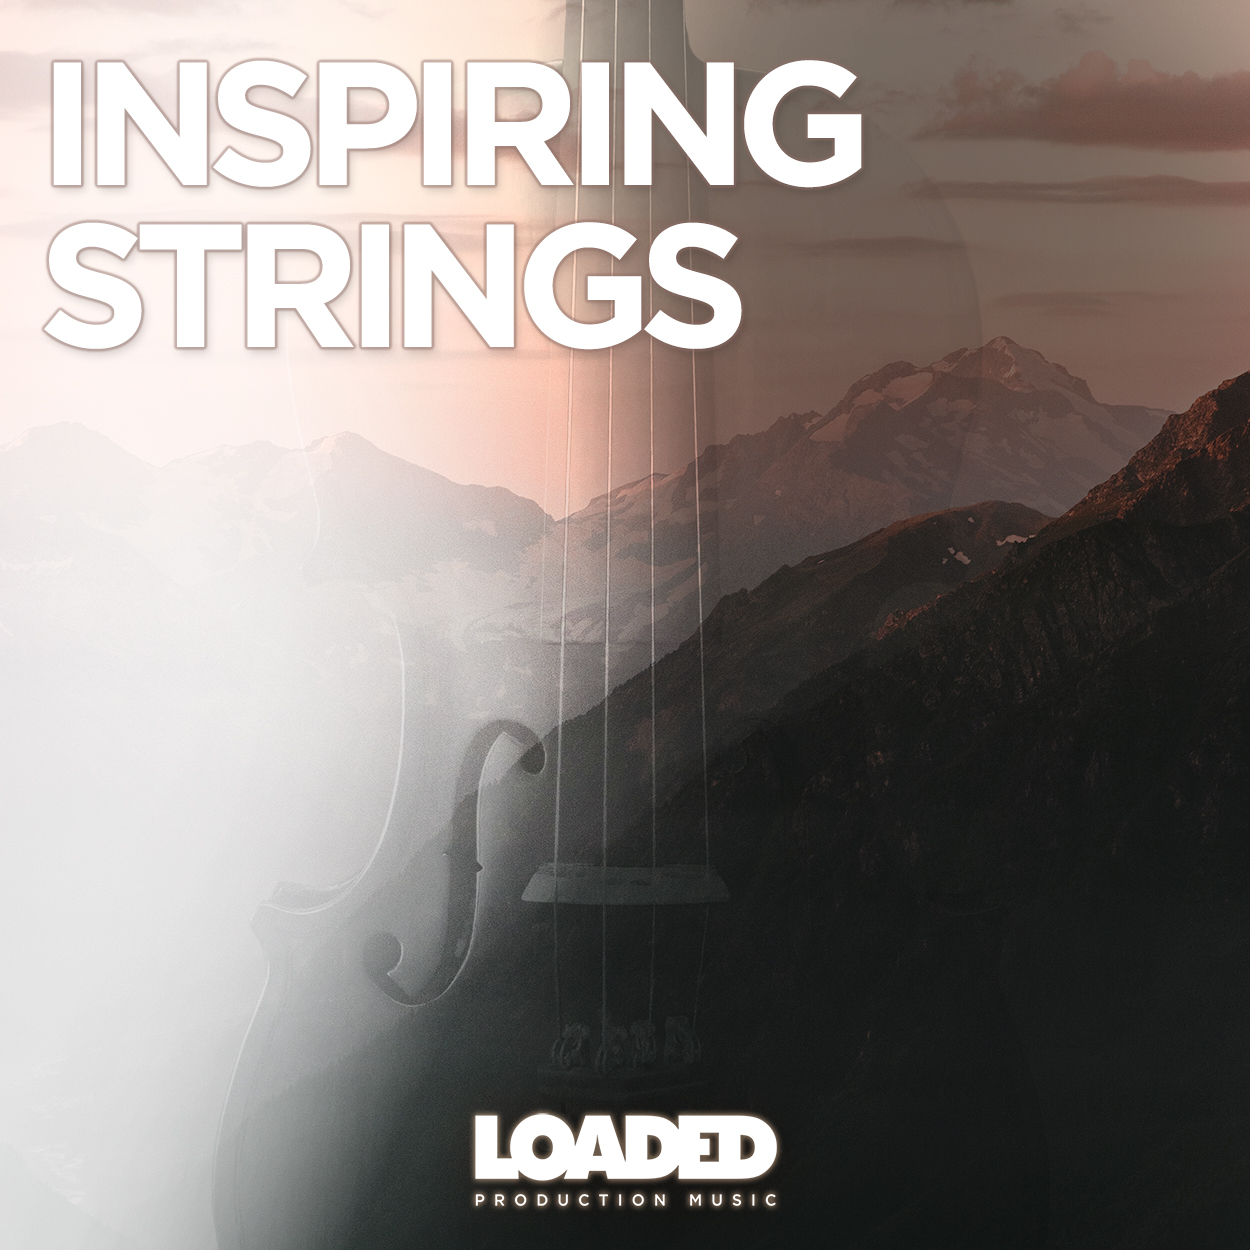 LPM 125 - Inspiring Strings - Album Cover